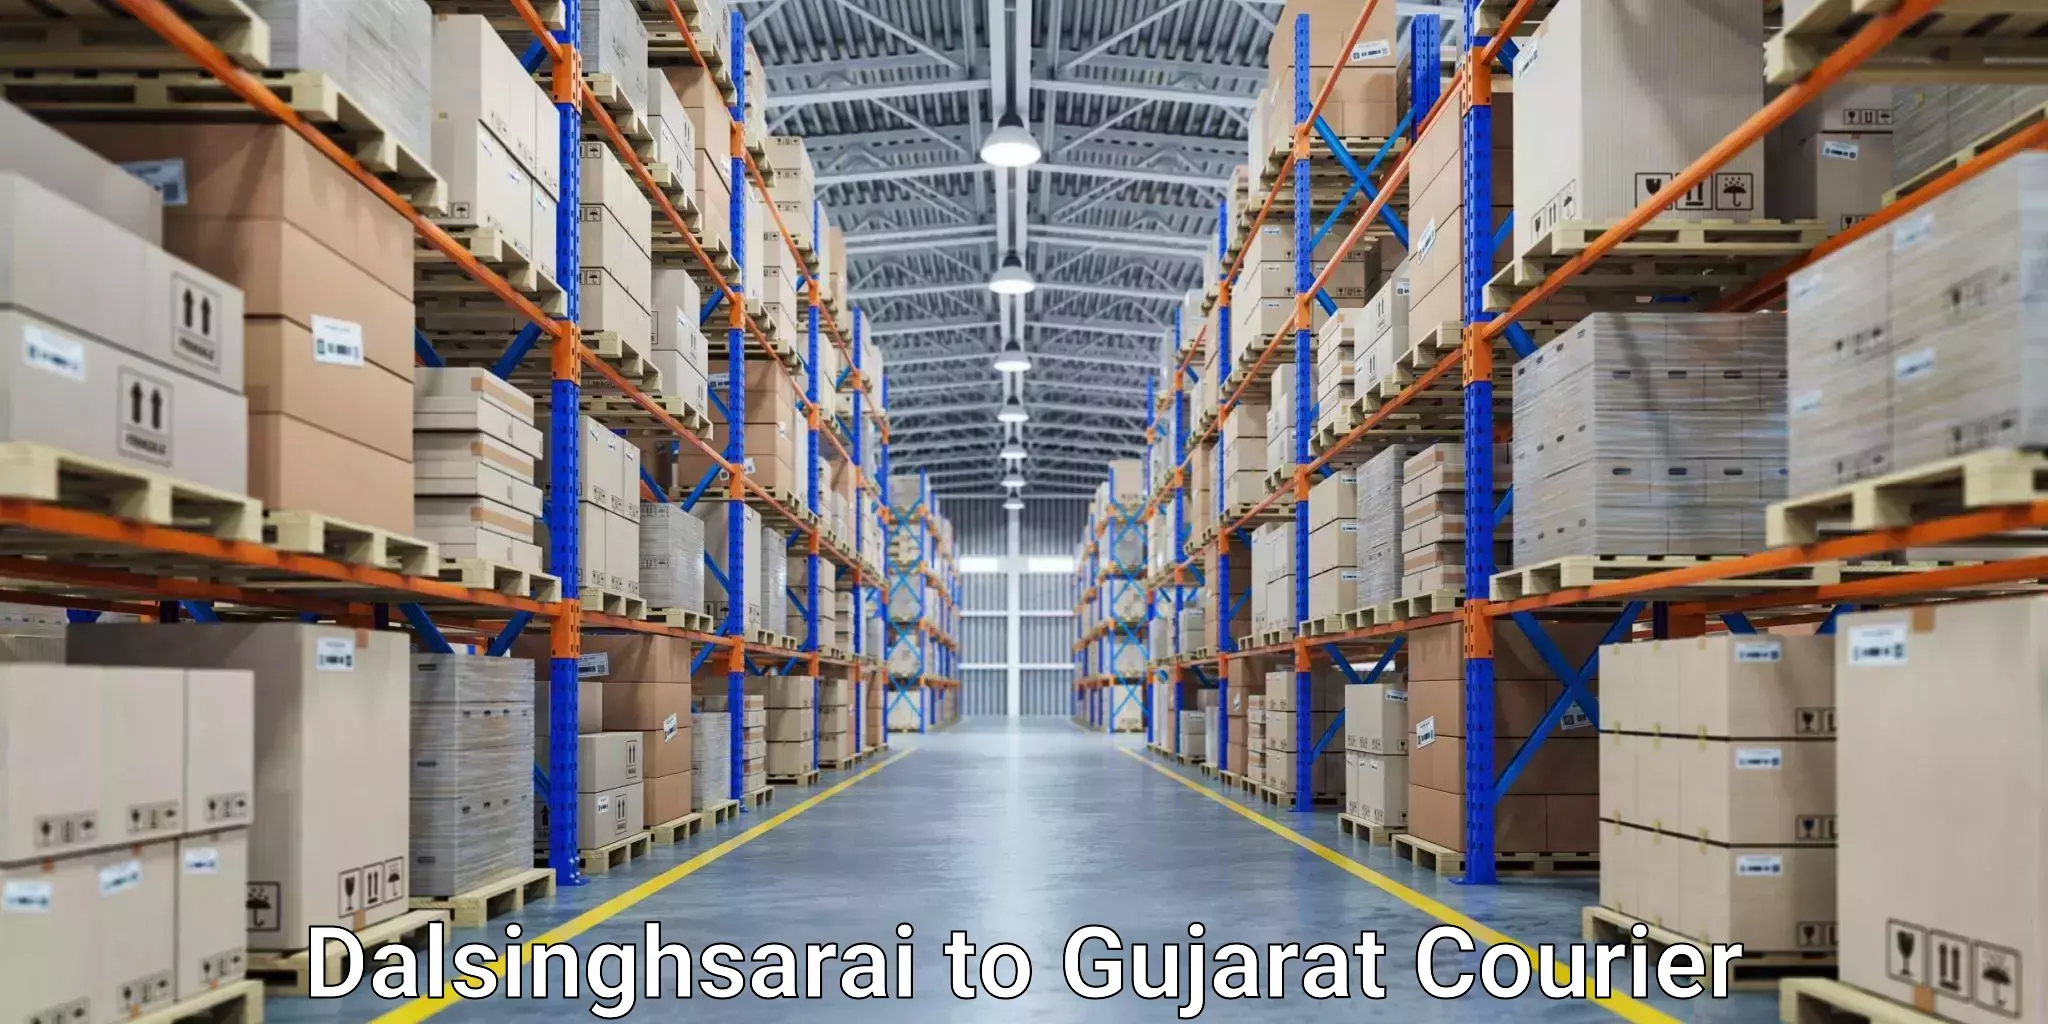 Global shipping networks Dalsinghsarai to Gujarat